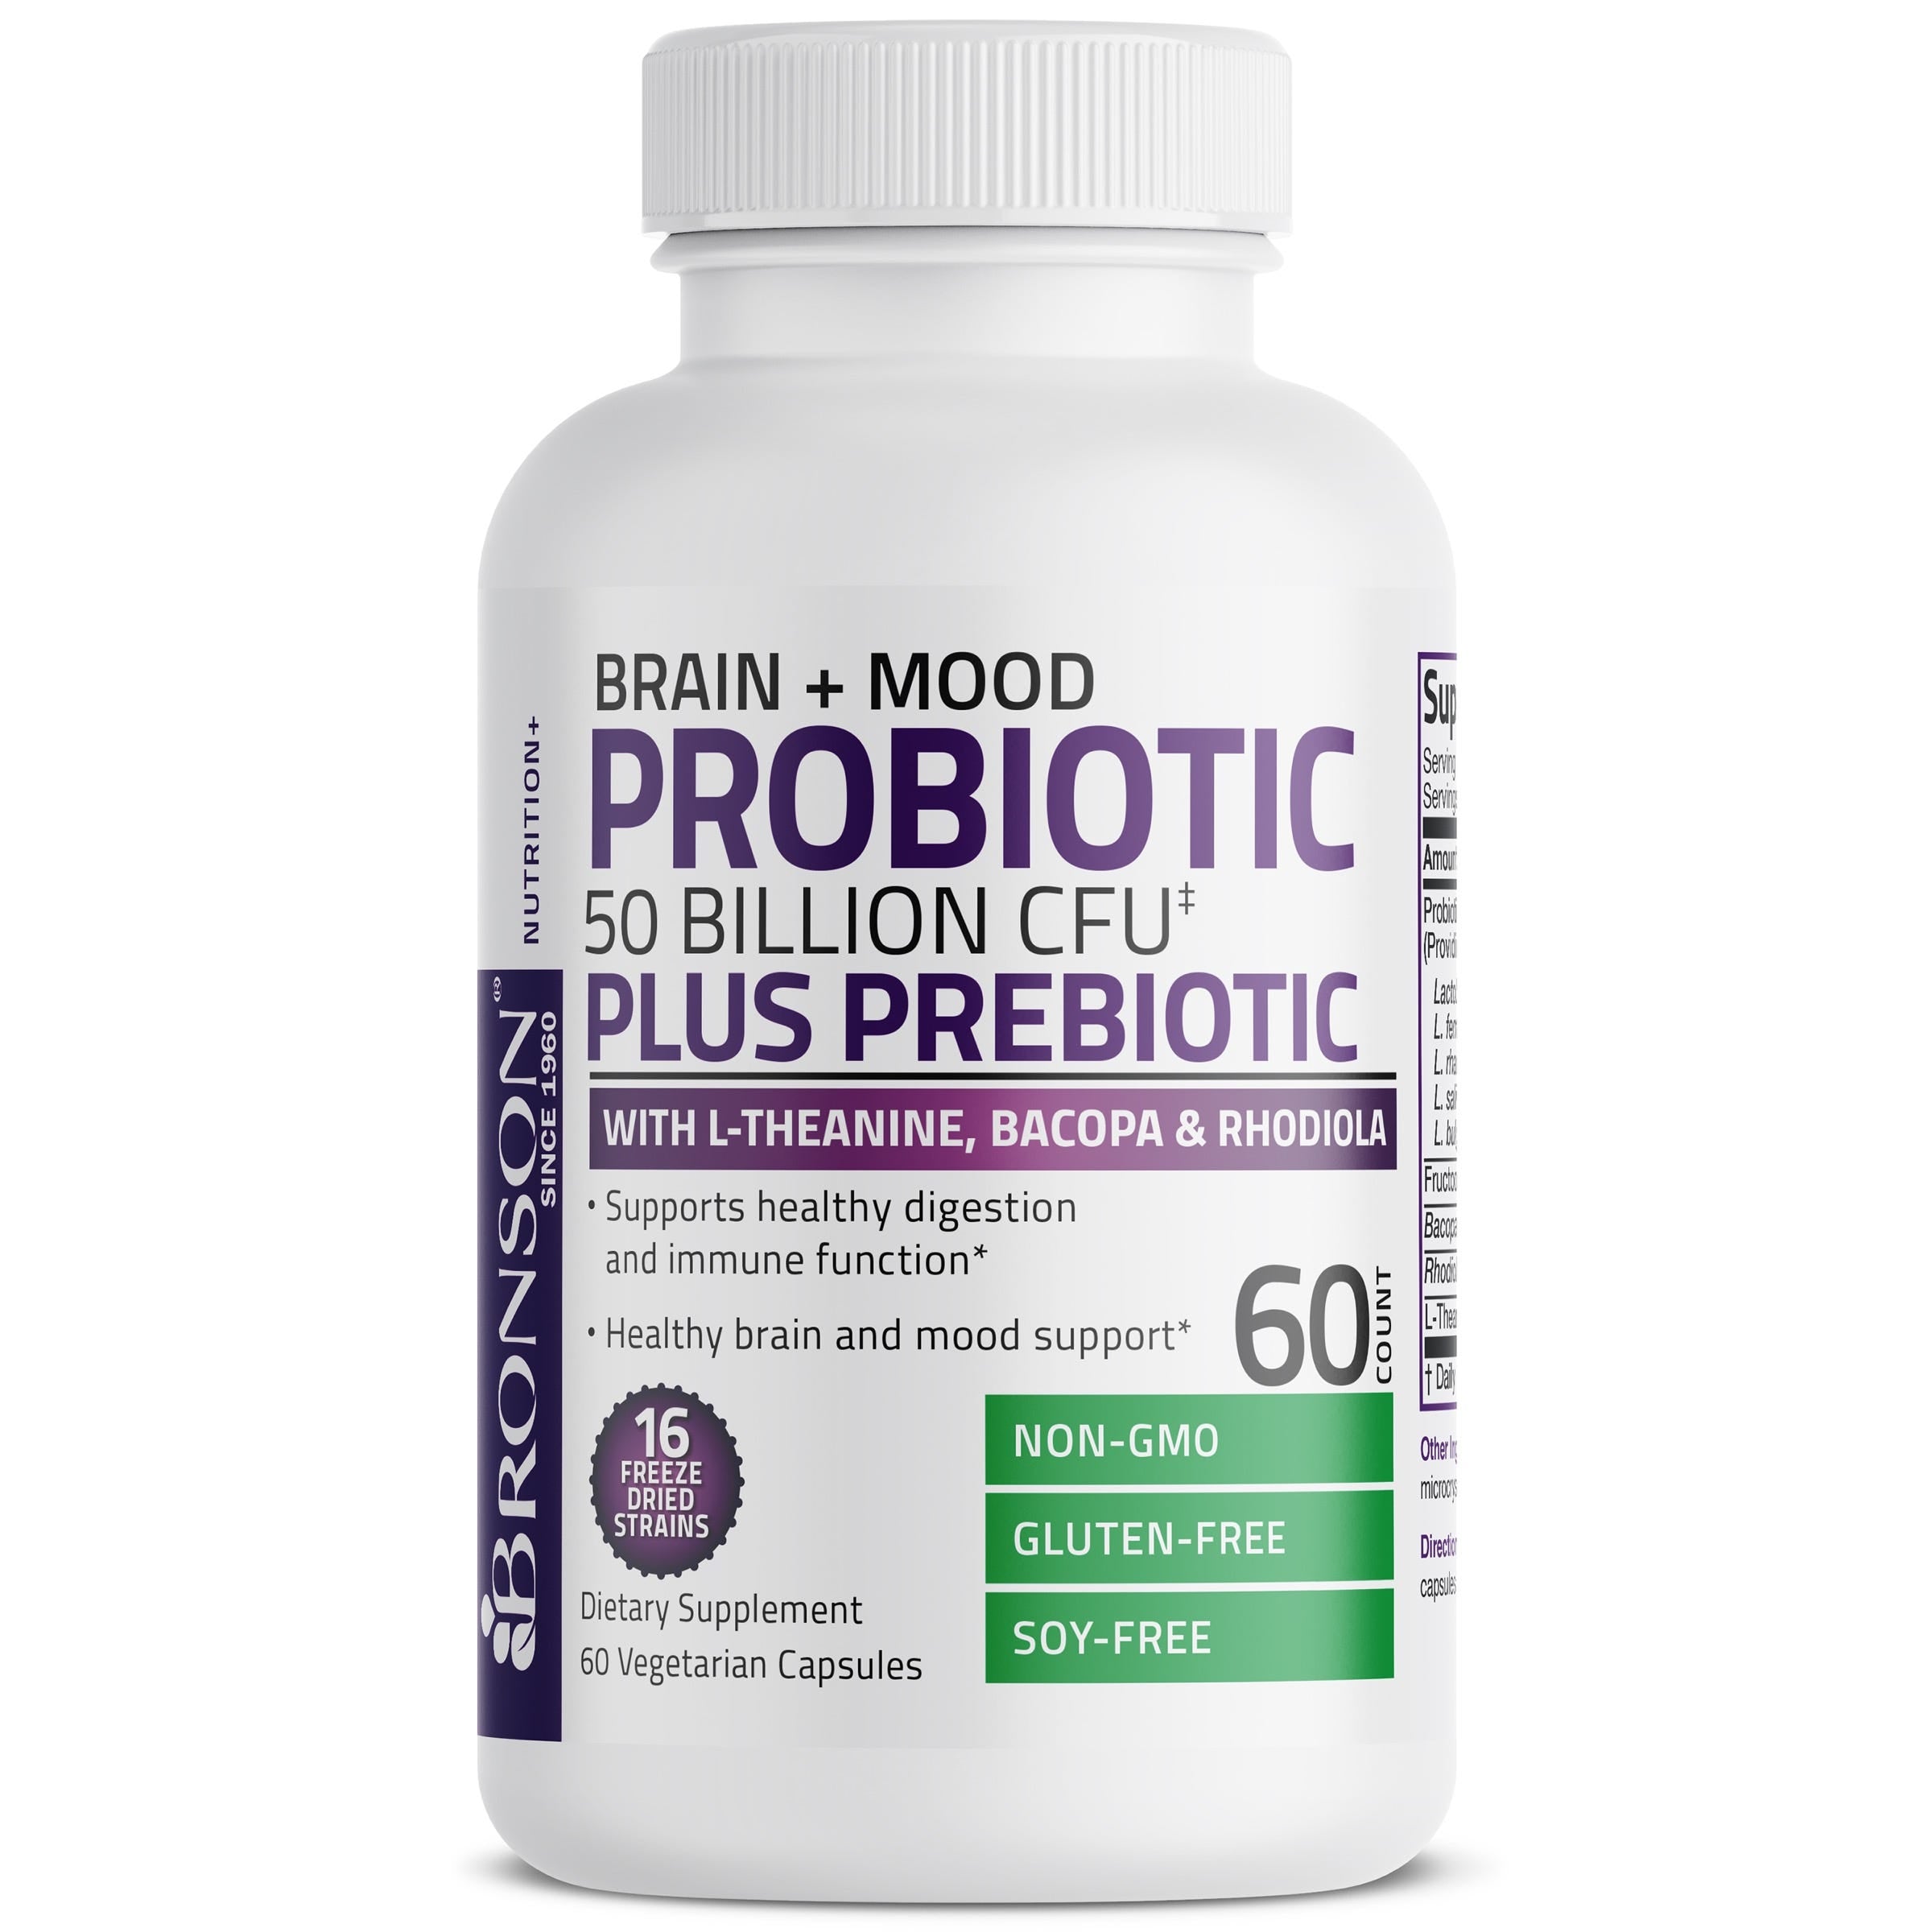 Probiotic Plus Prebiotic with L-Theanine, Bacopa & Rhodiola - 50 Billion CFU - 60 Vegetarian Capsules view 5 of 7